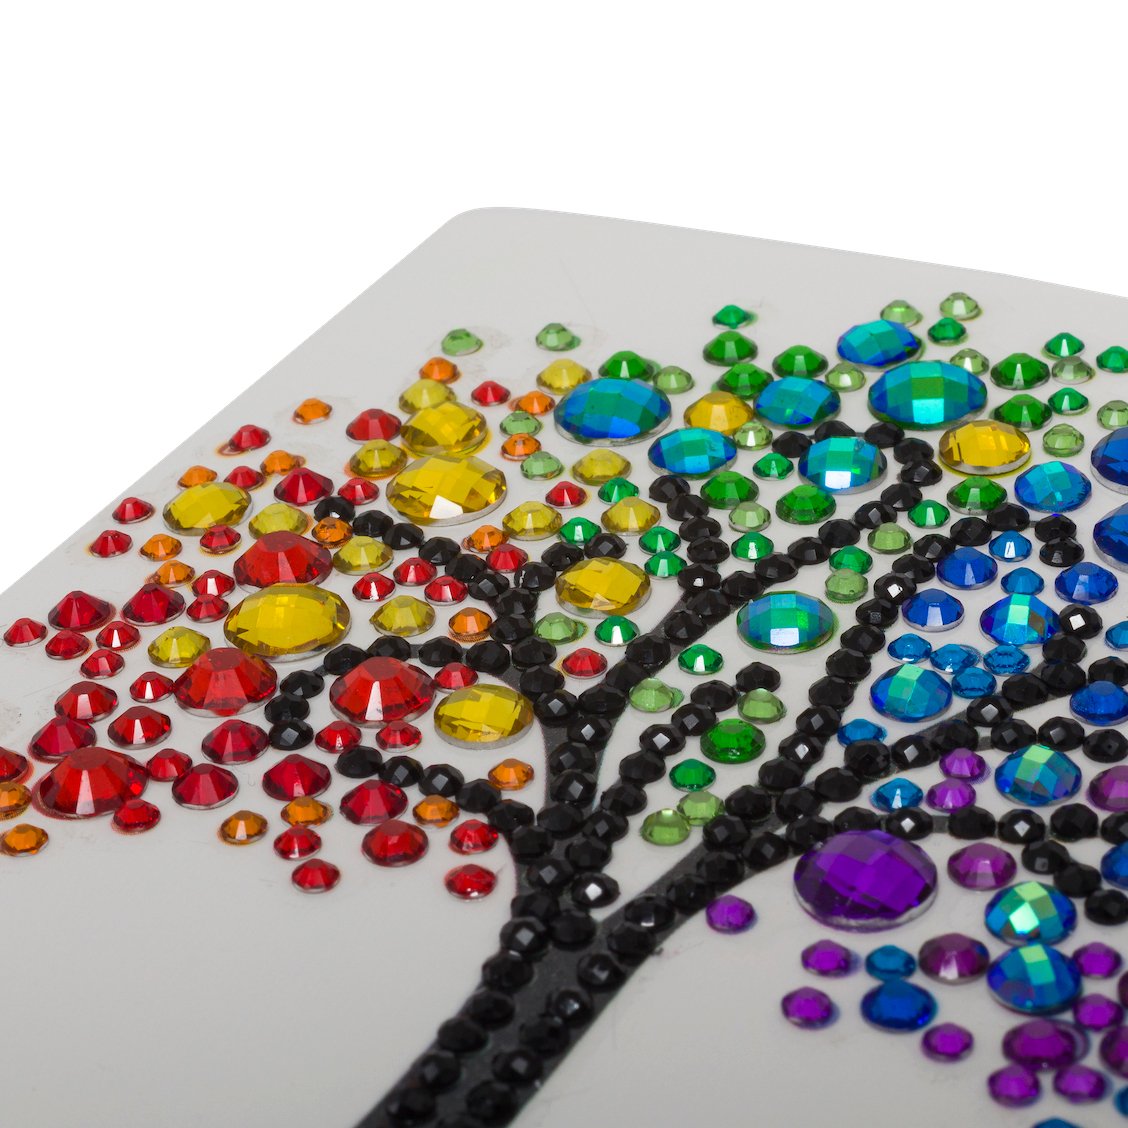 Rainbow Tree, 10x15cm Crystal Art Card